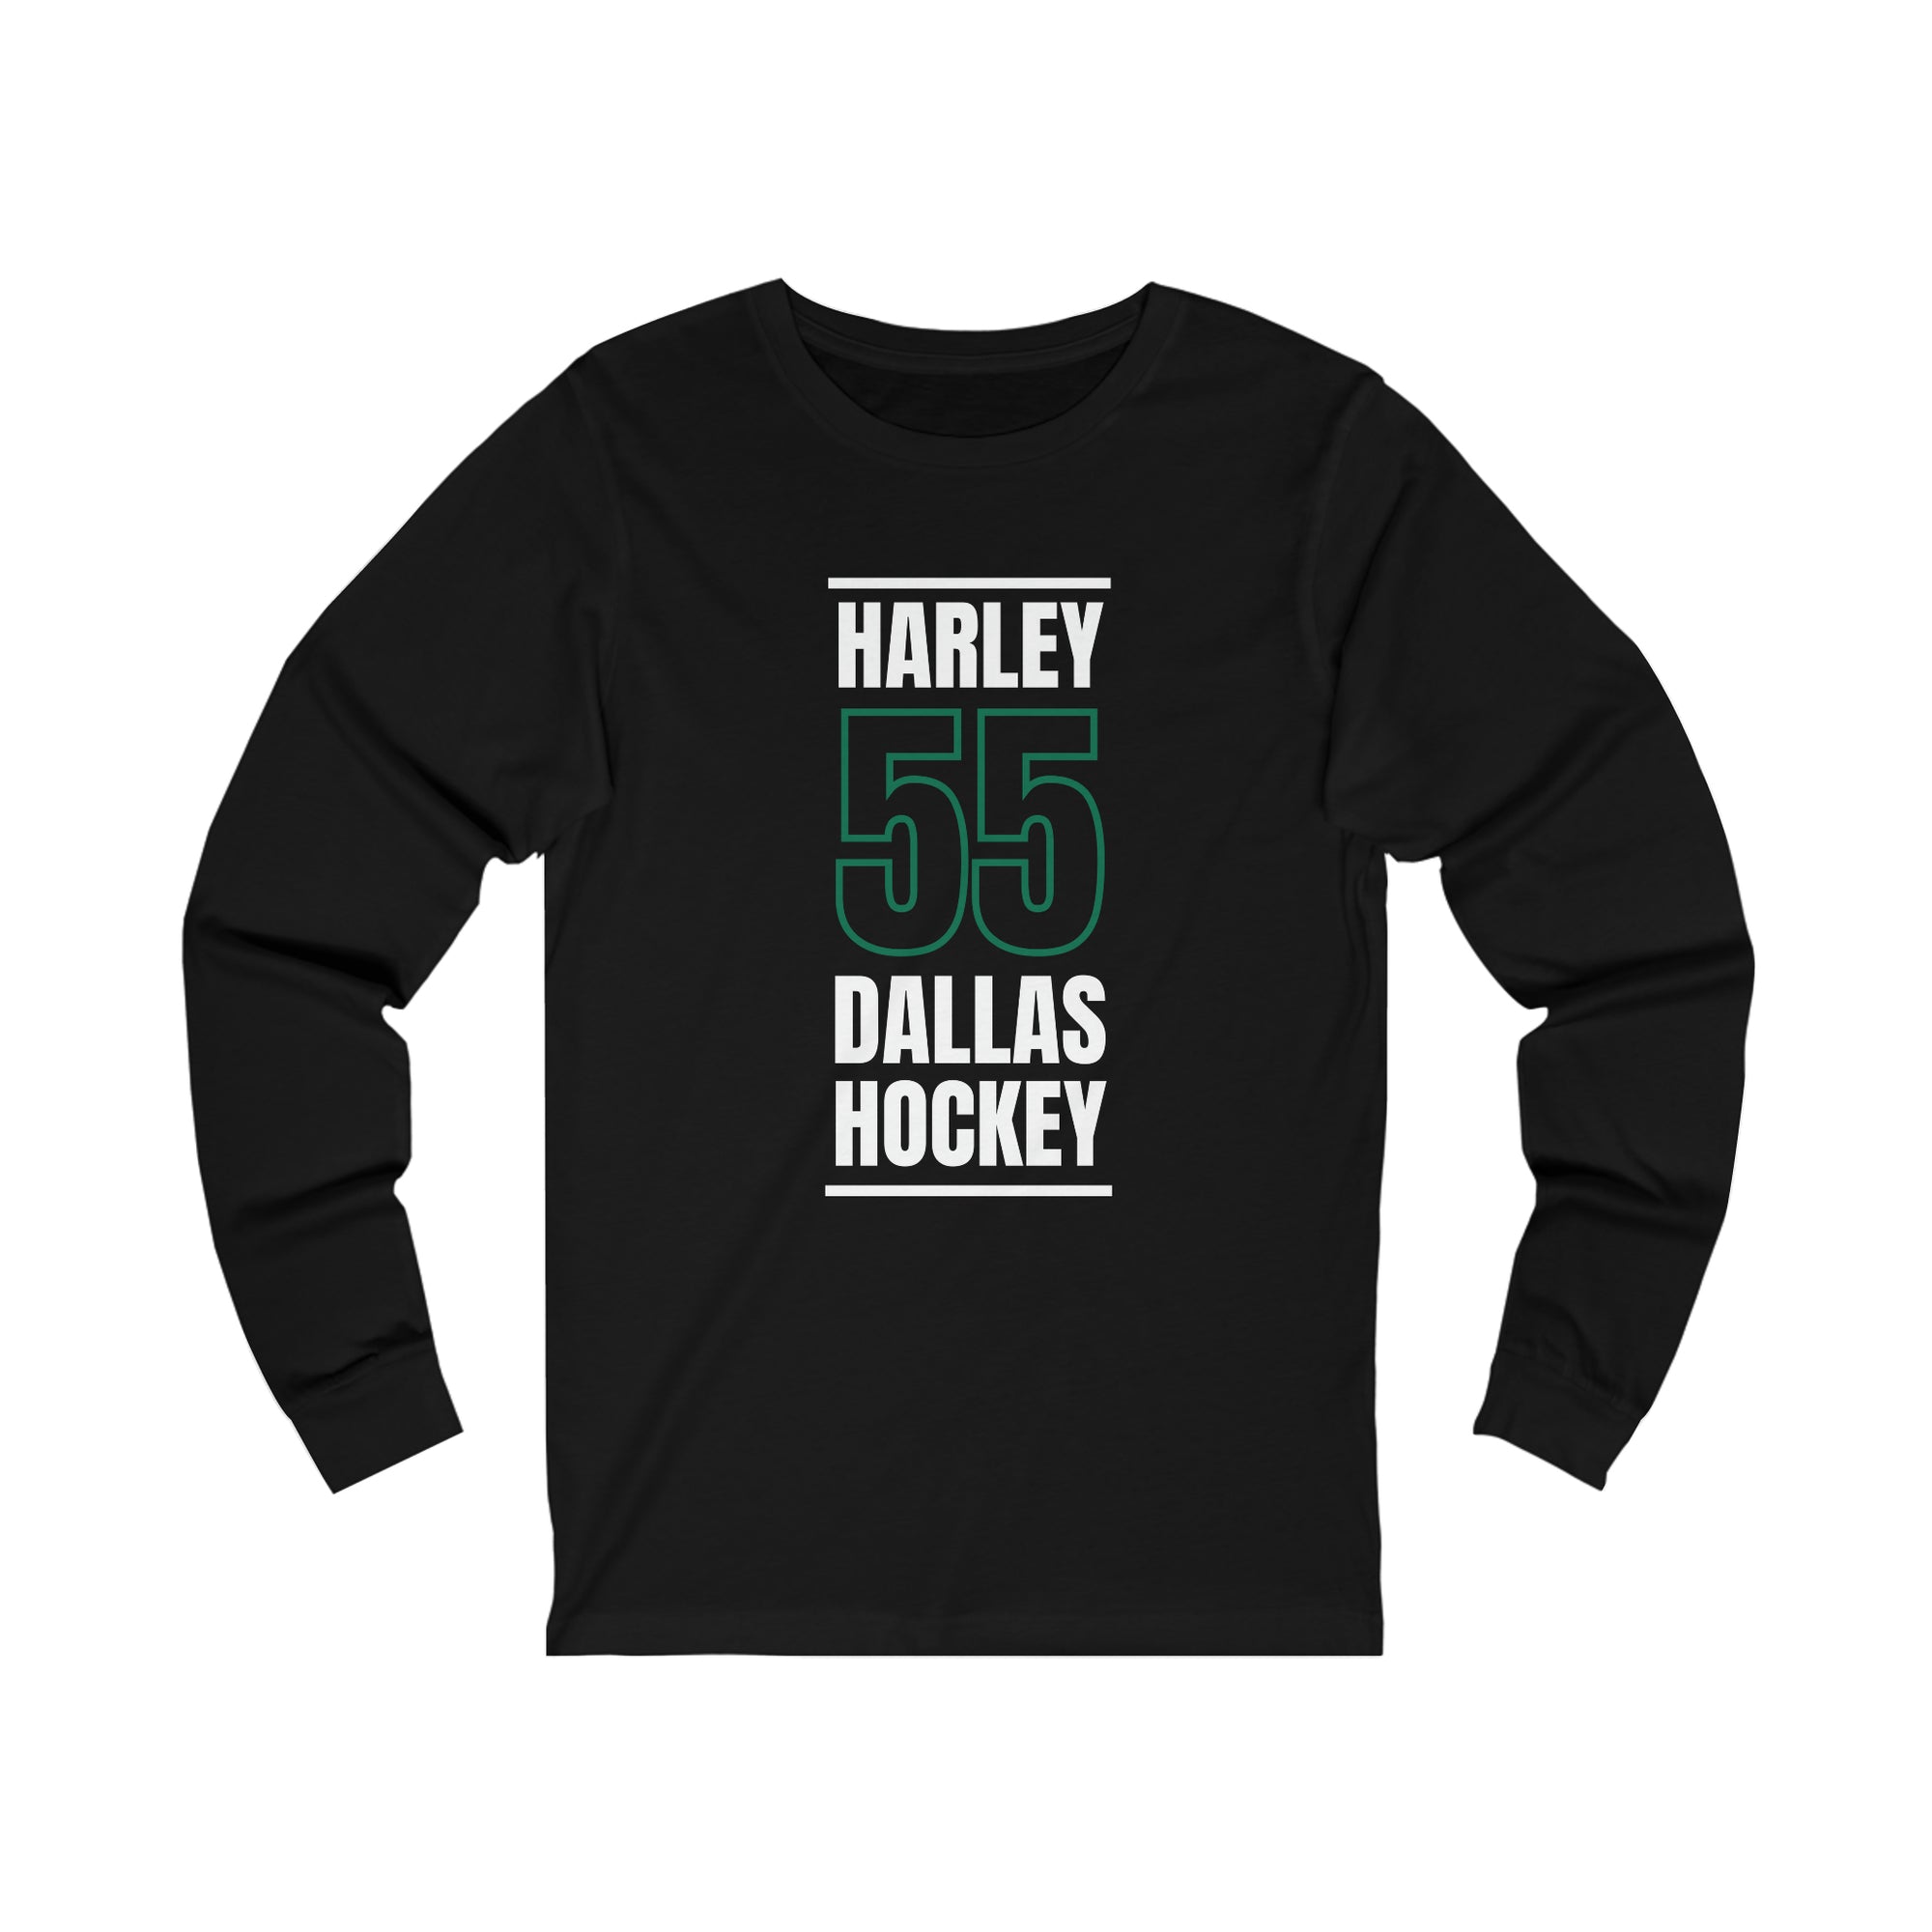 Harley 55 Dallas Hockey Black Vertical Design Unisex Jersey Long Sleeve Shirt